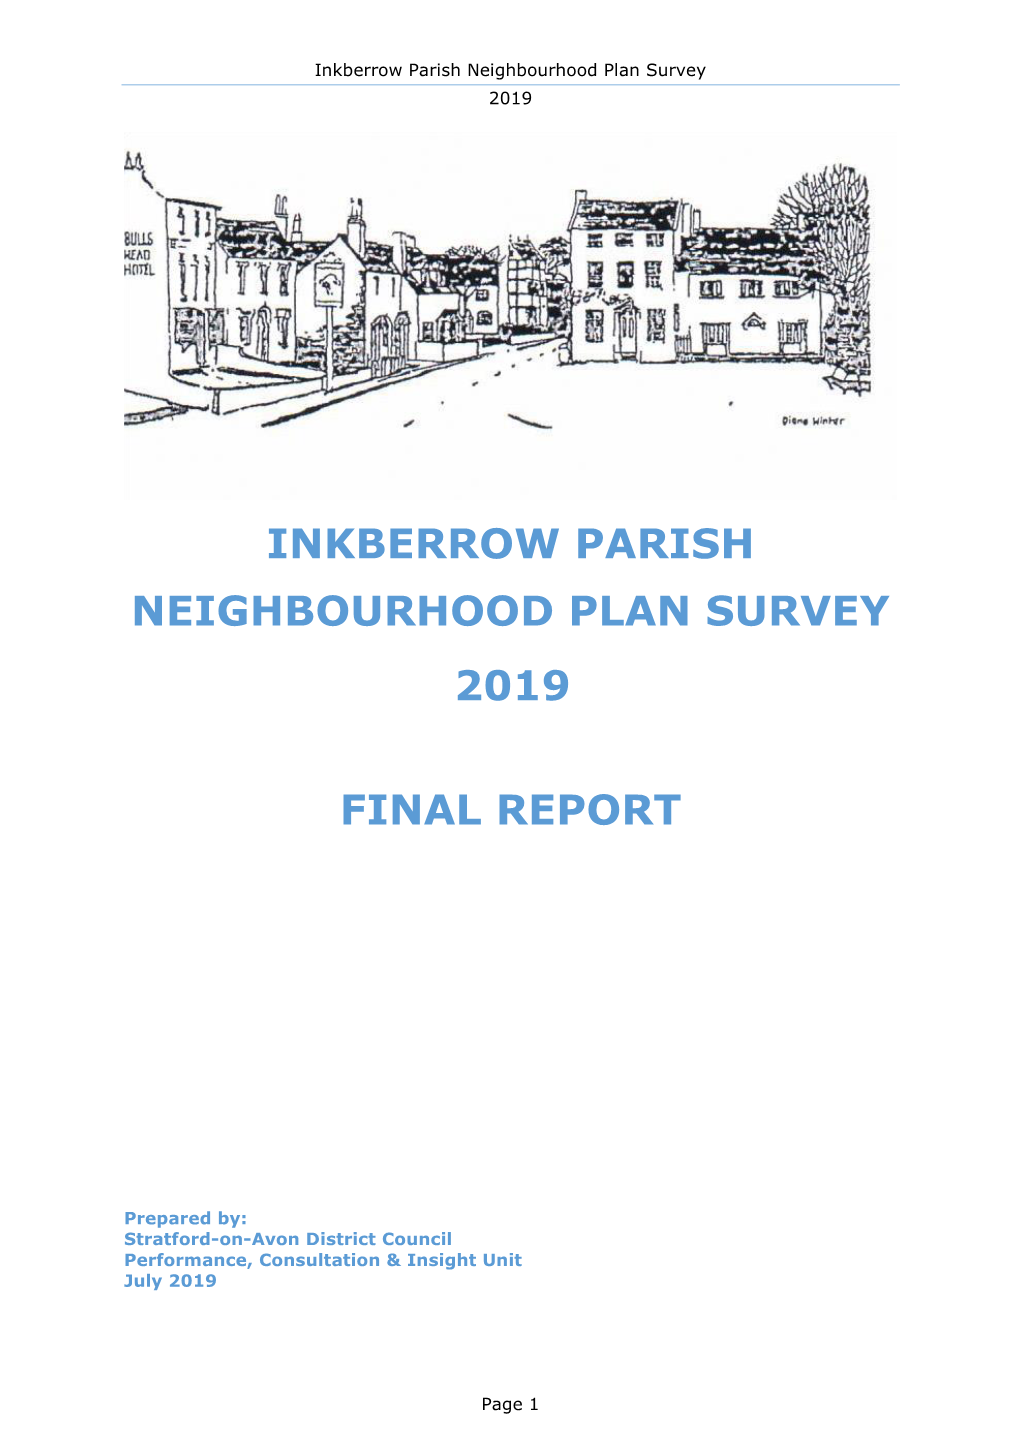 Inkberrow Parish Neighbourhood Plan Survey 2019 Final Report